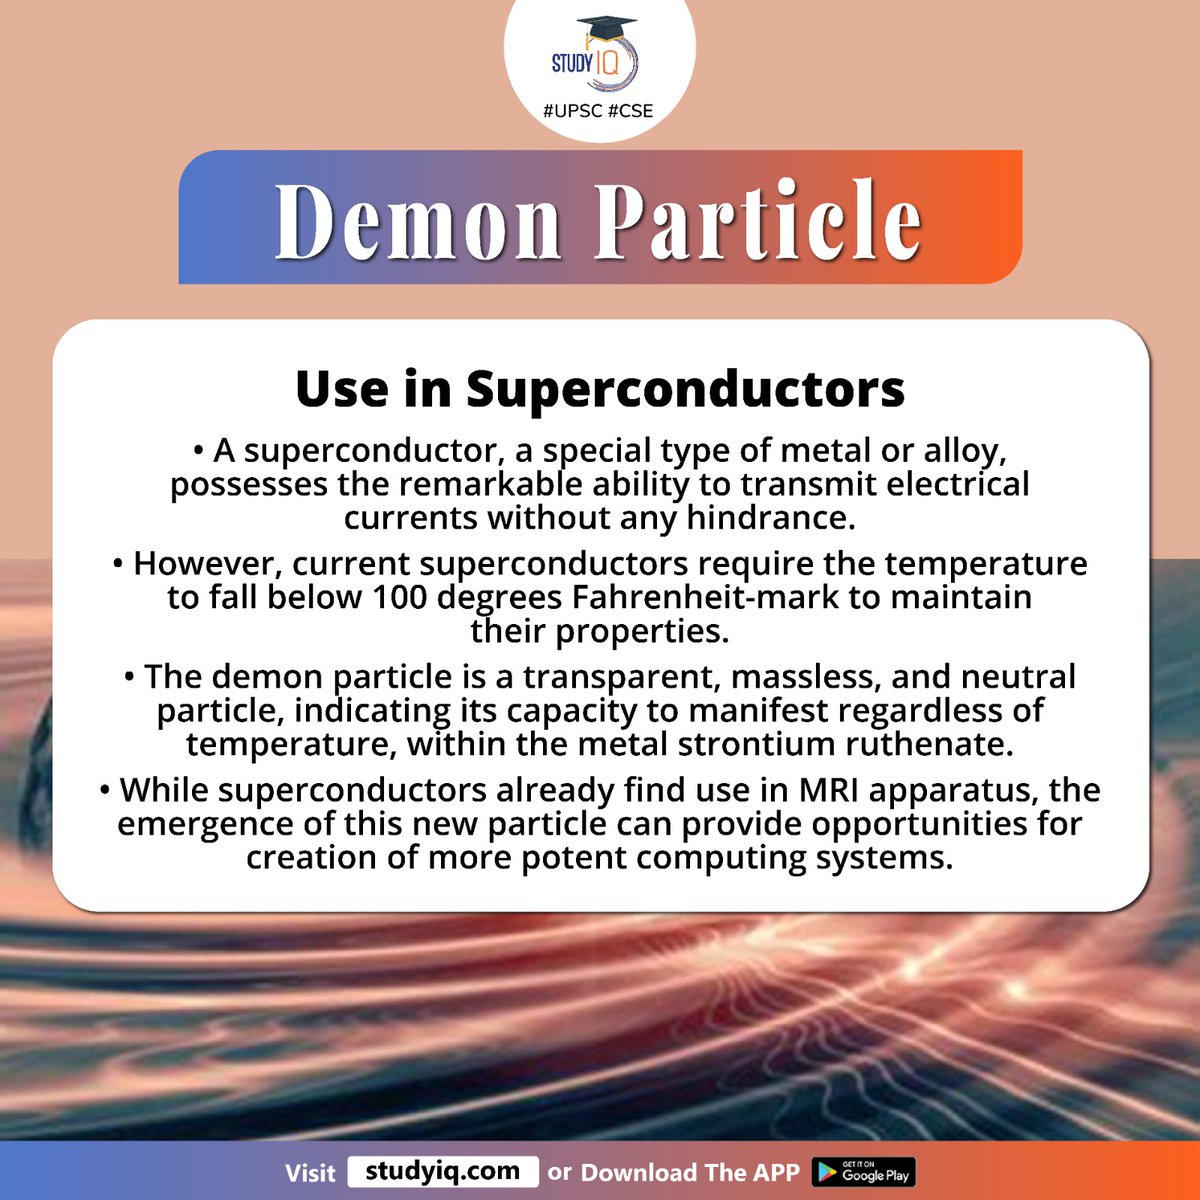 Demon Particle

#demonparticle #universityofillinois #superconductors #physicistdavidpines #electriccharge #metal #alloy #electricalcurrents #naturalparticle #mri #computingsystems #upsc #cse #ips #ias #worldaffairs #worldnews